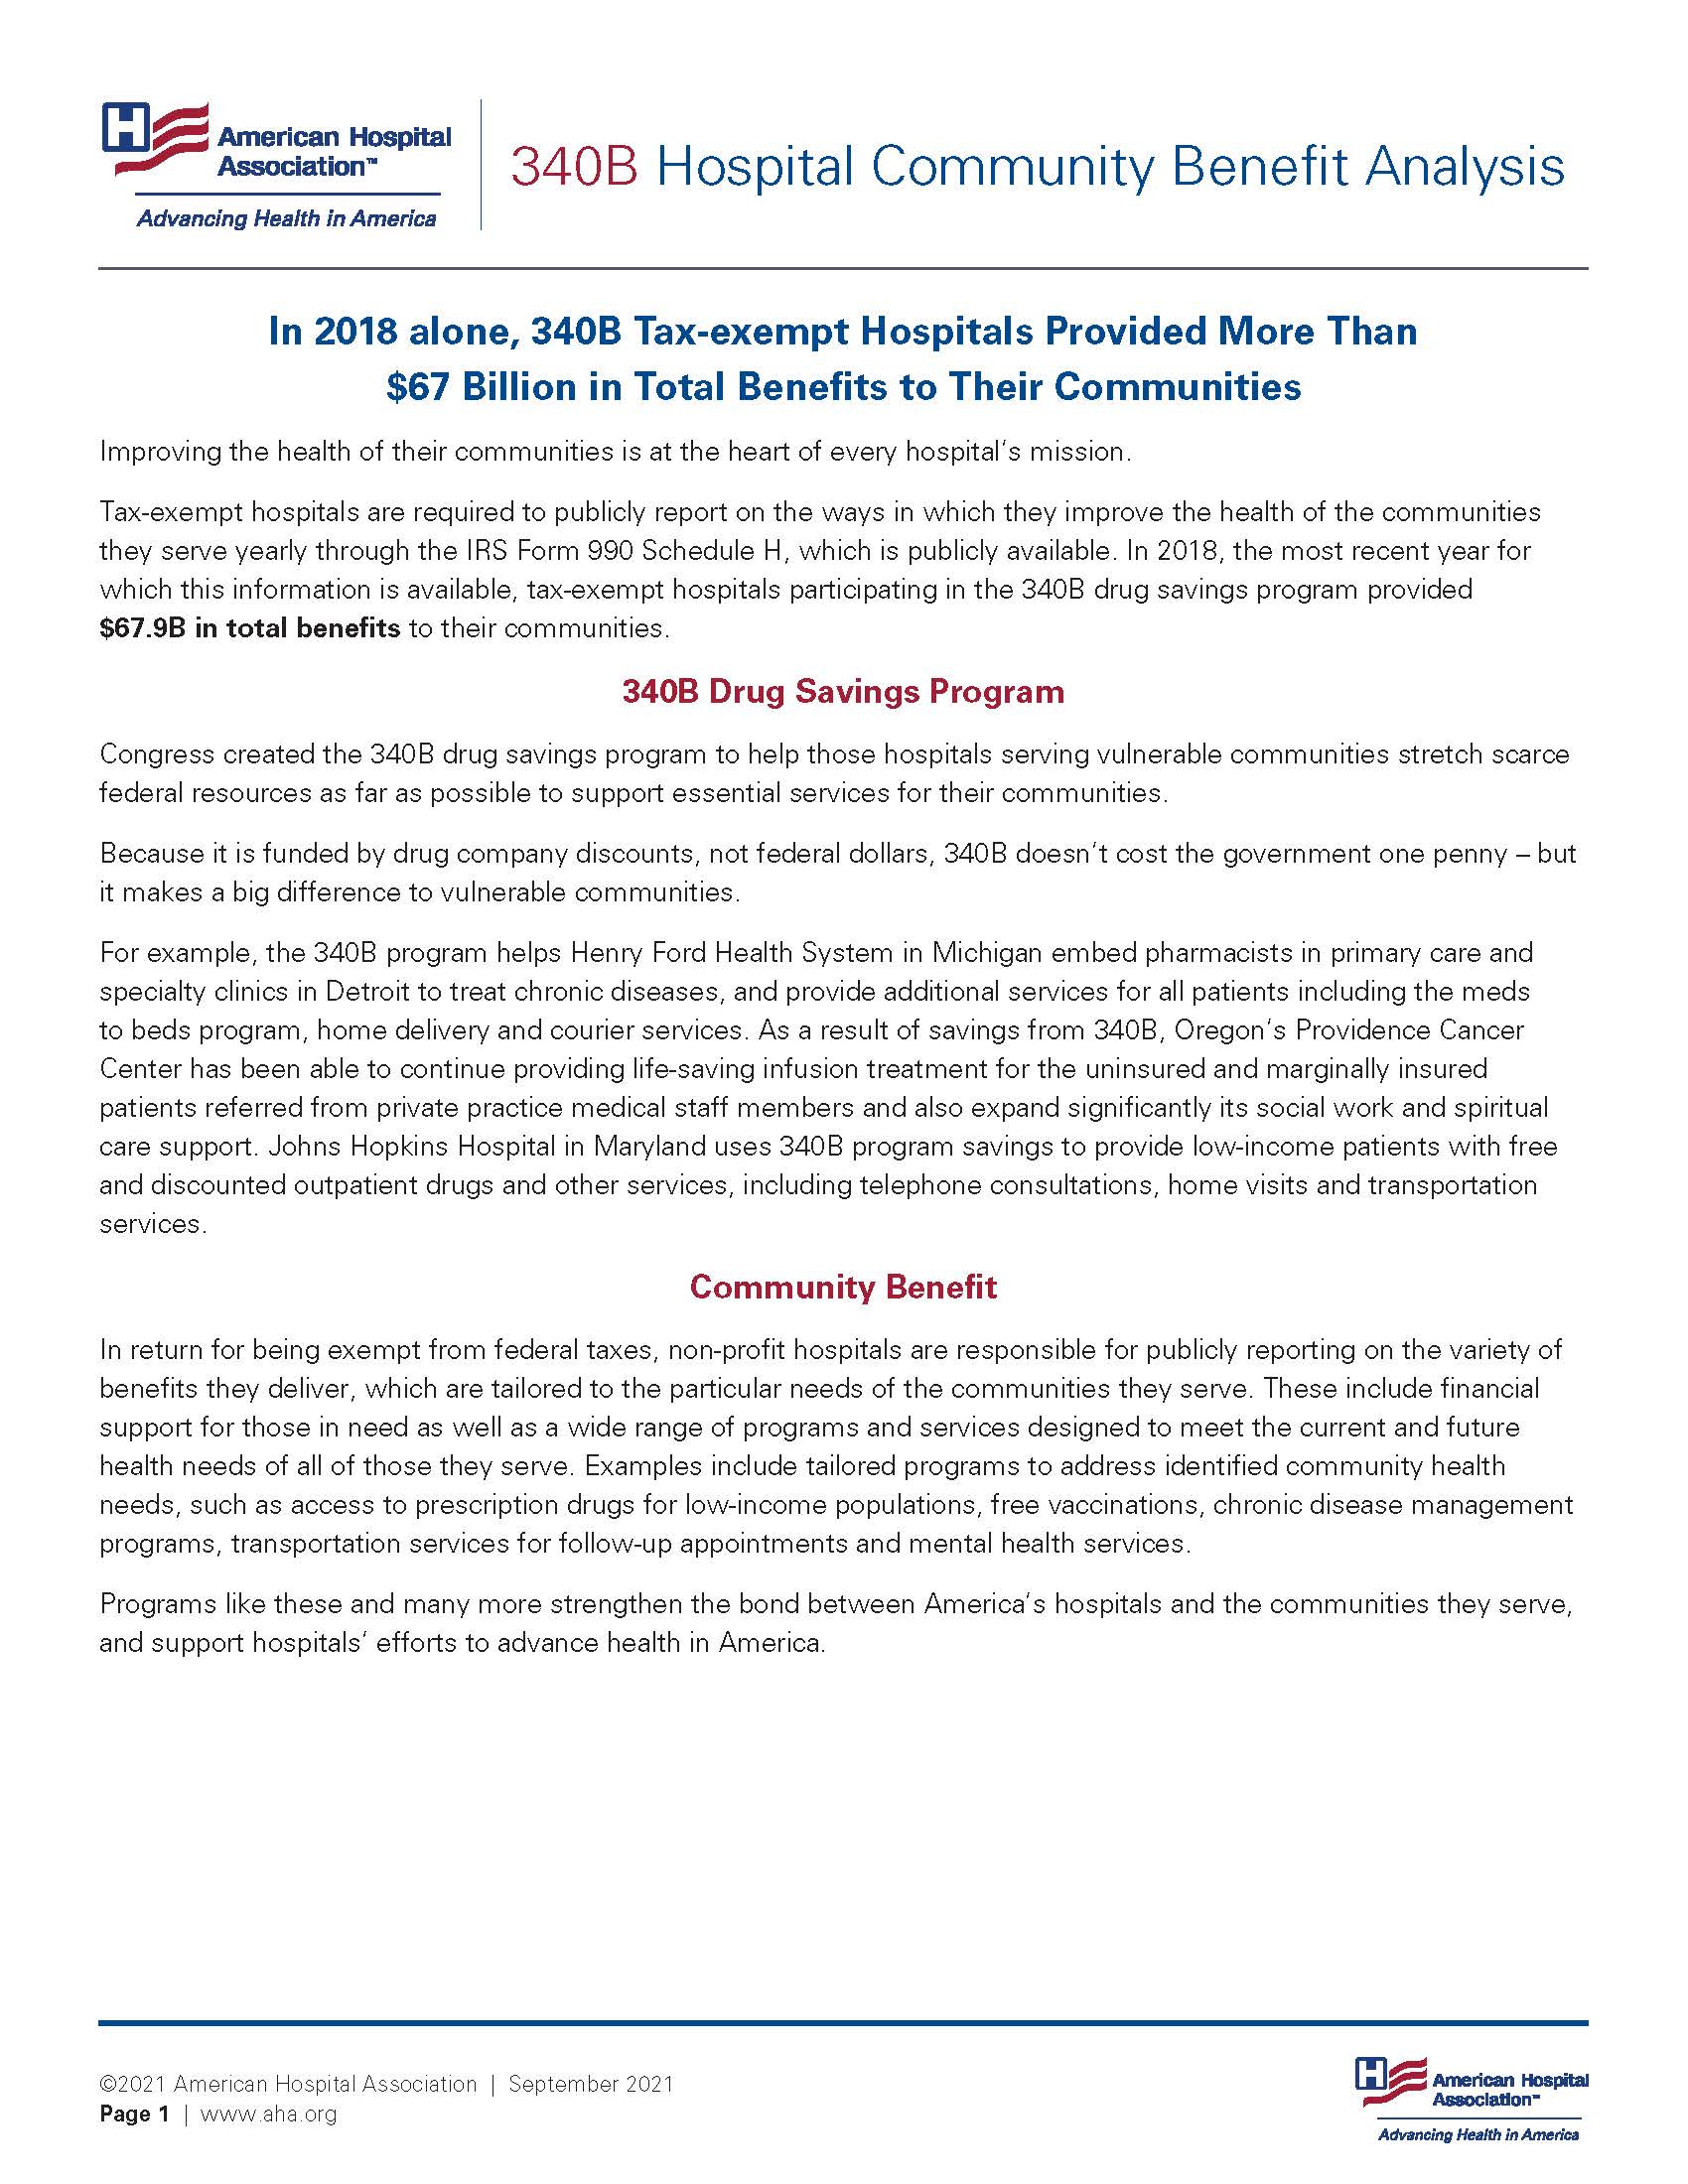 340B Hospital Community Benefit Analysis page 1.